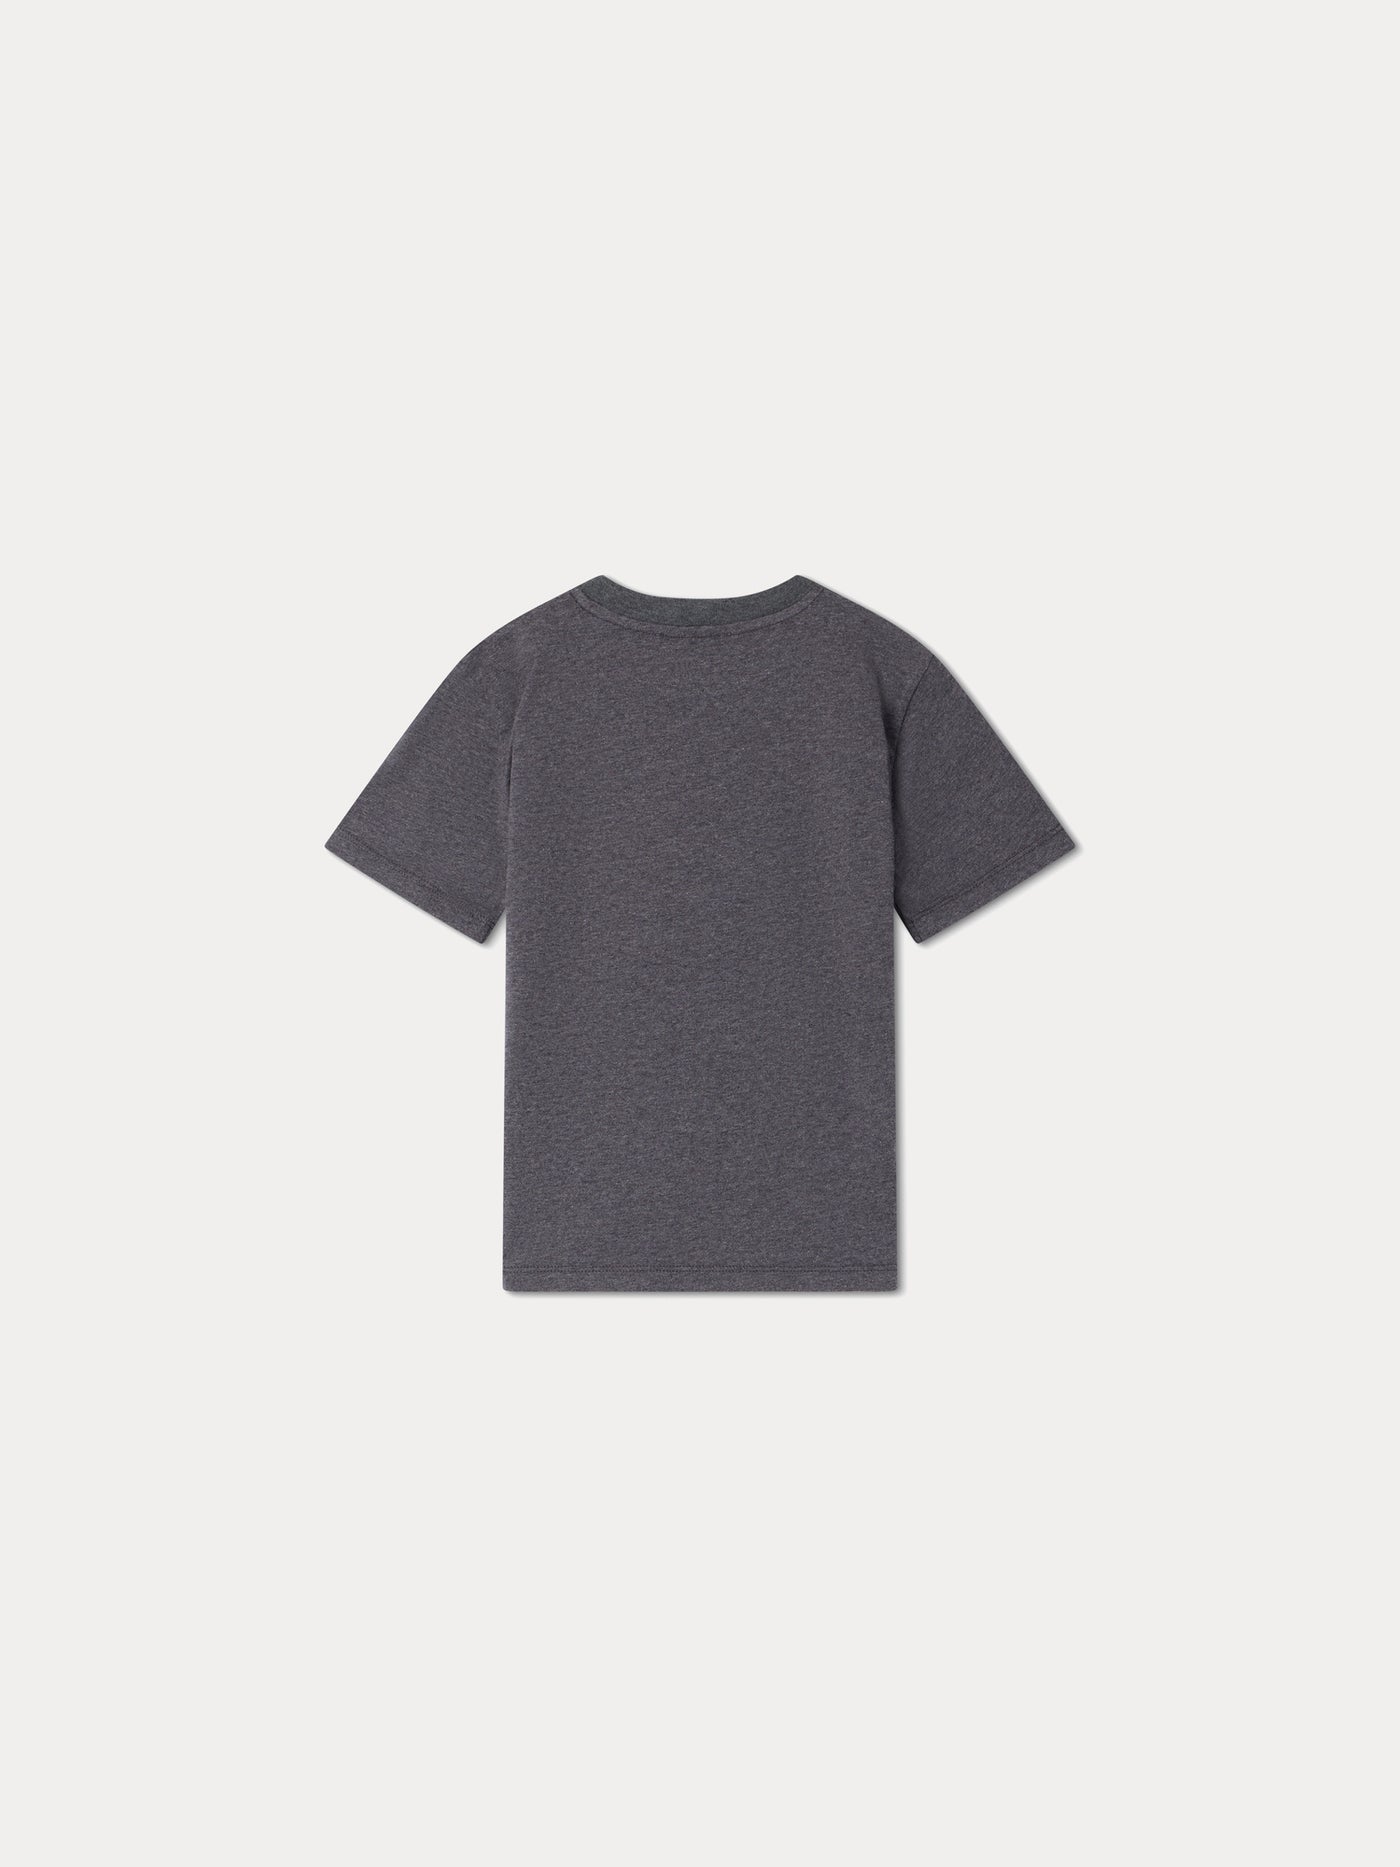 Thibald T-Shirt dark mottled grey